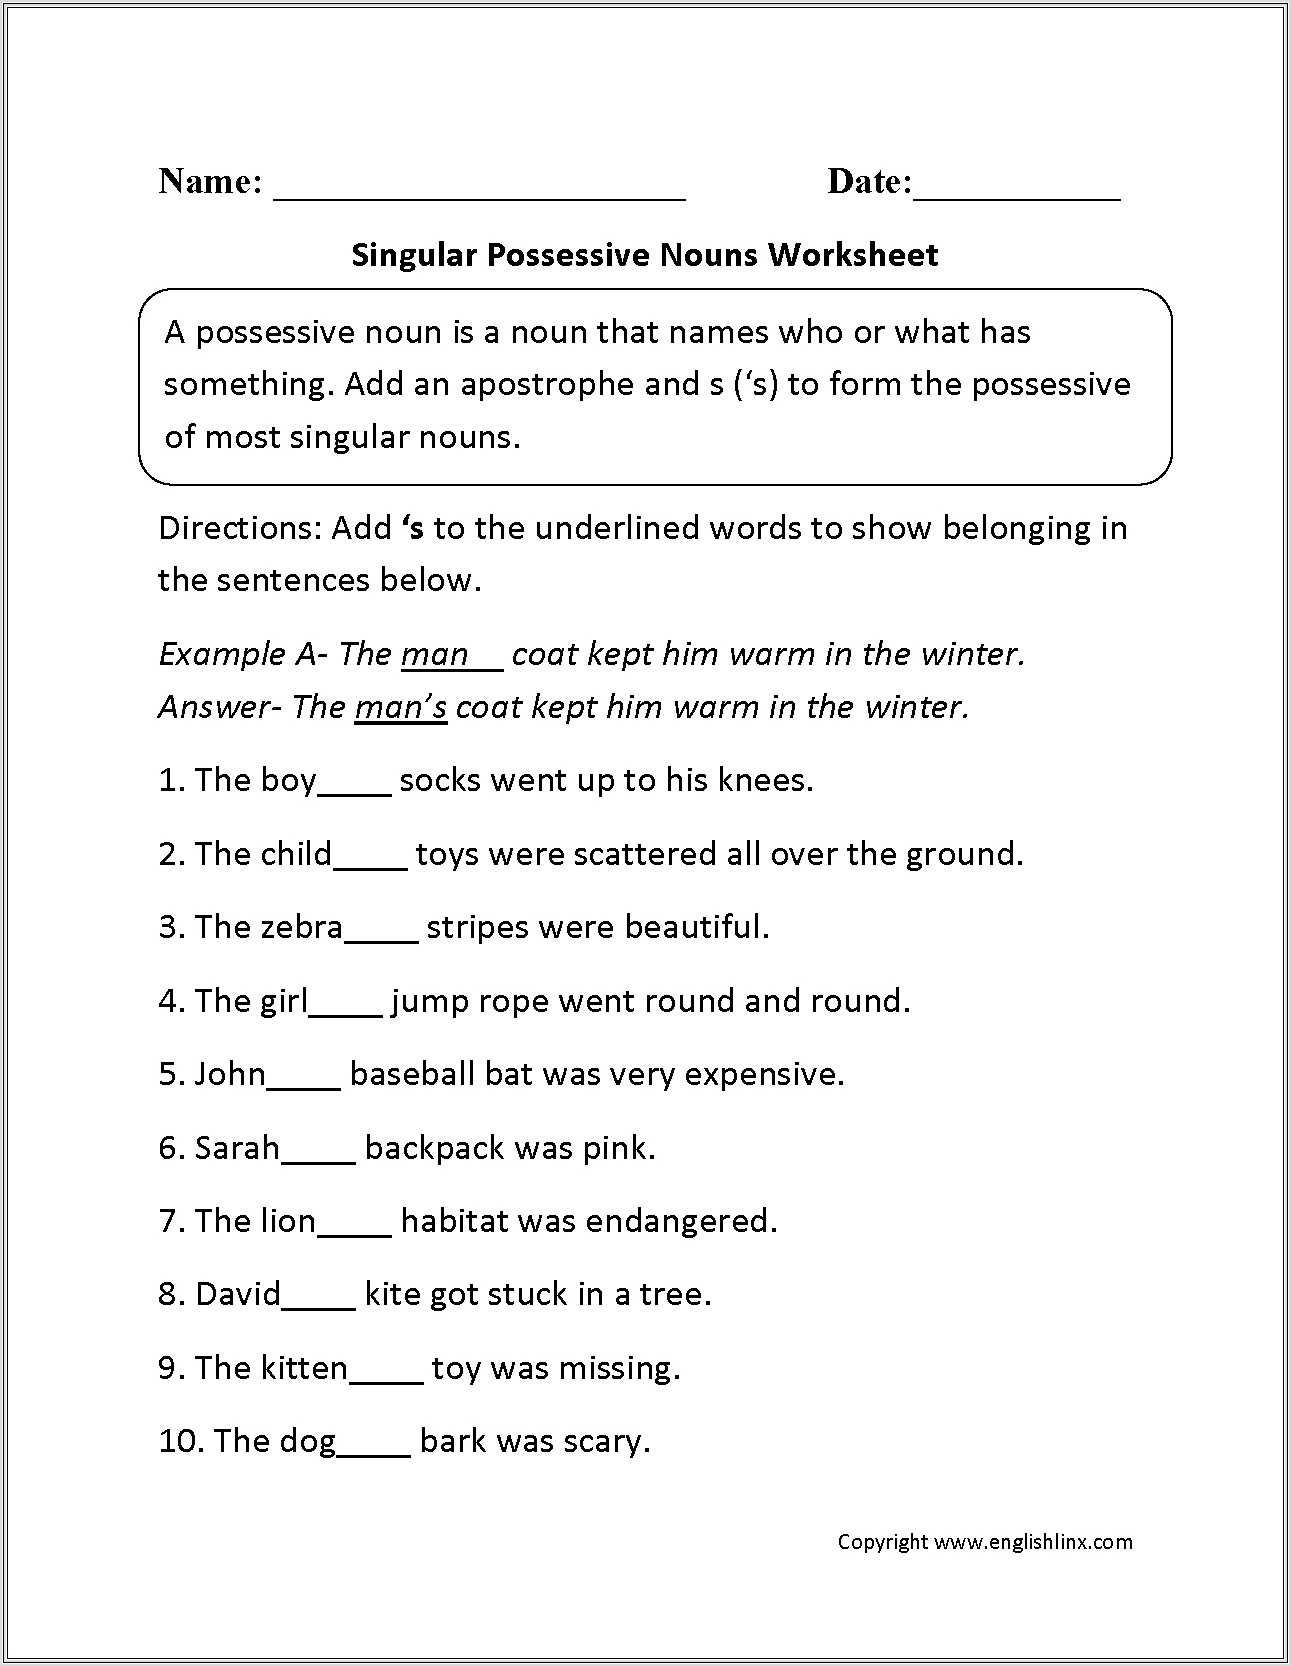 printable-worksheet-countable-and-uncountable-nouns-worksheet-restiumani-resume-o2lexv2aov